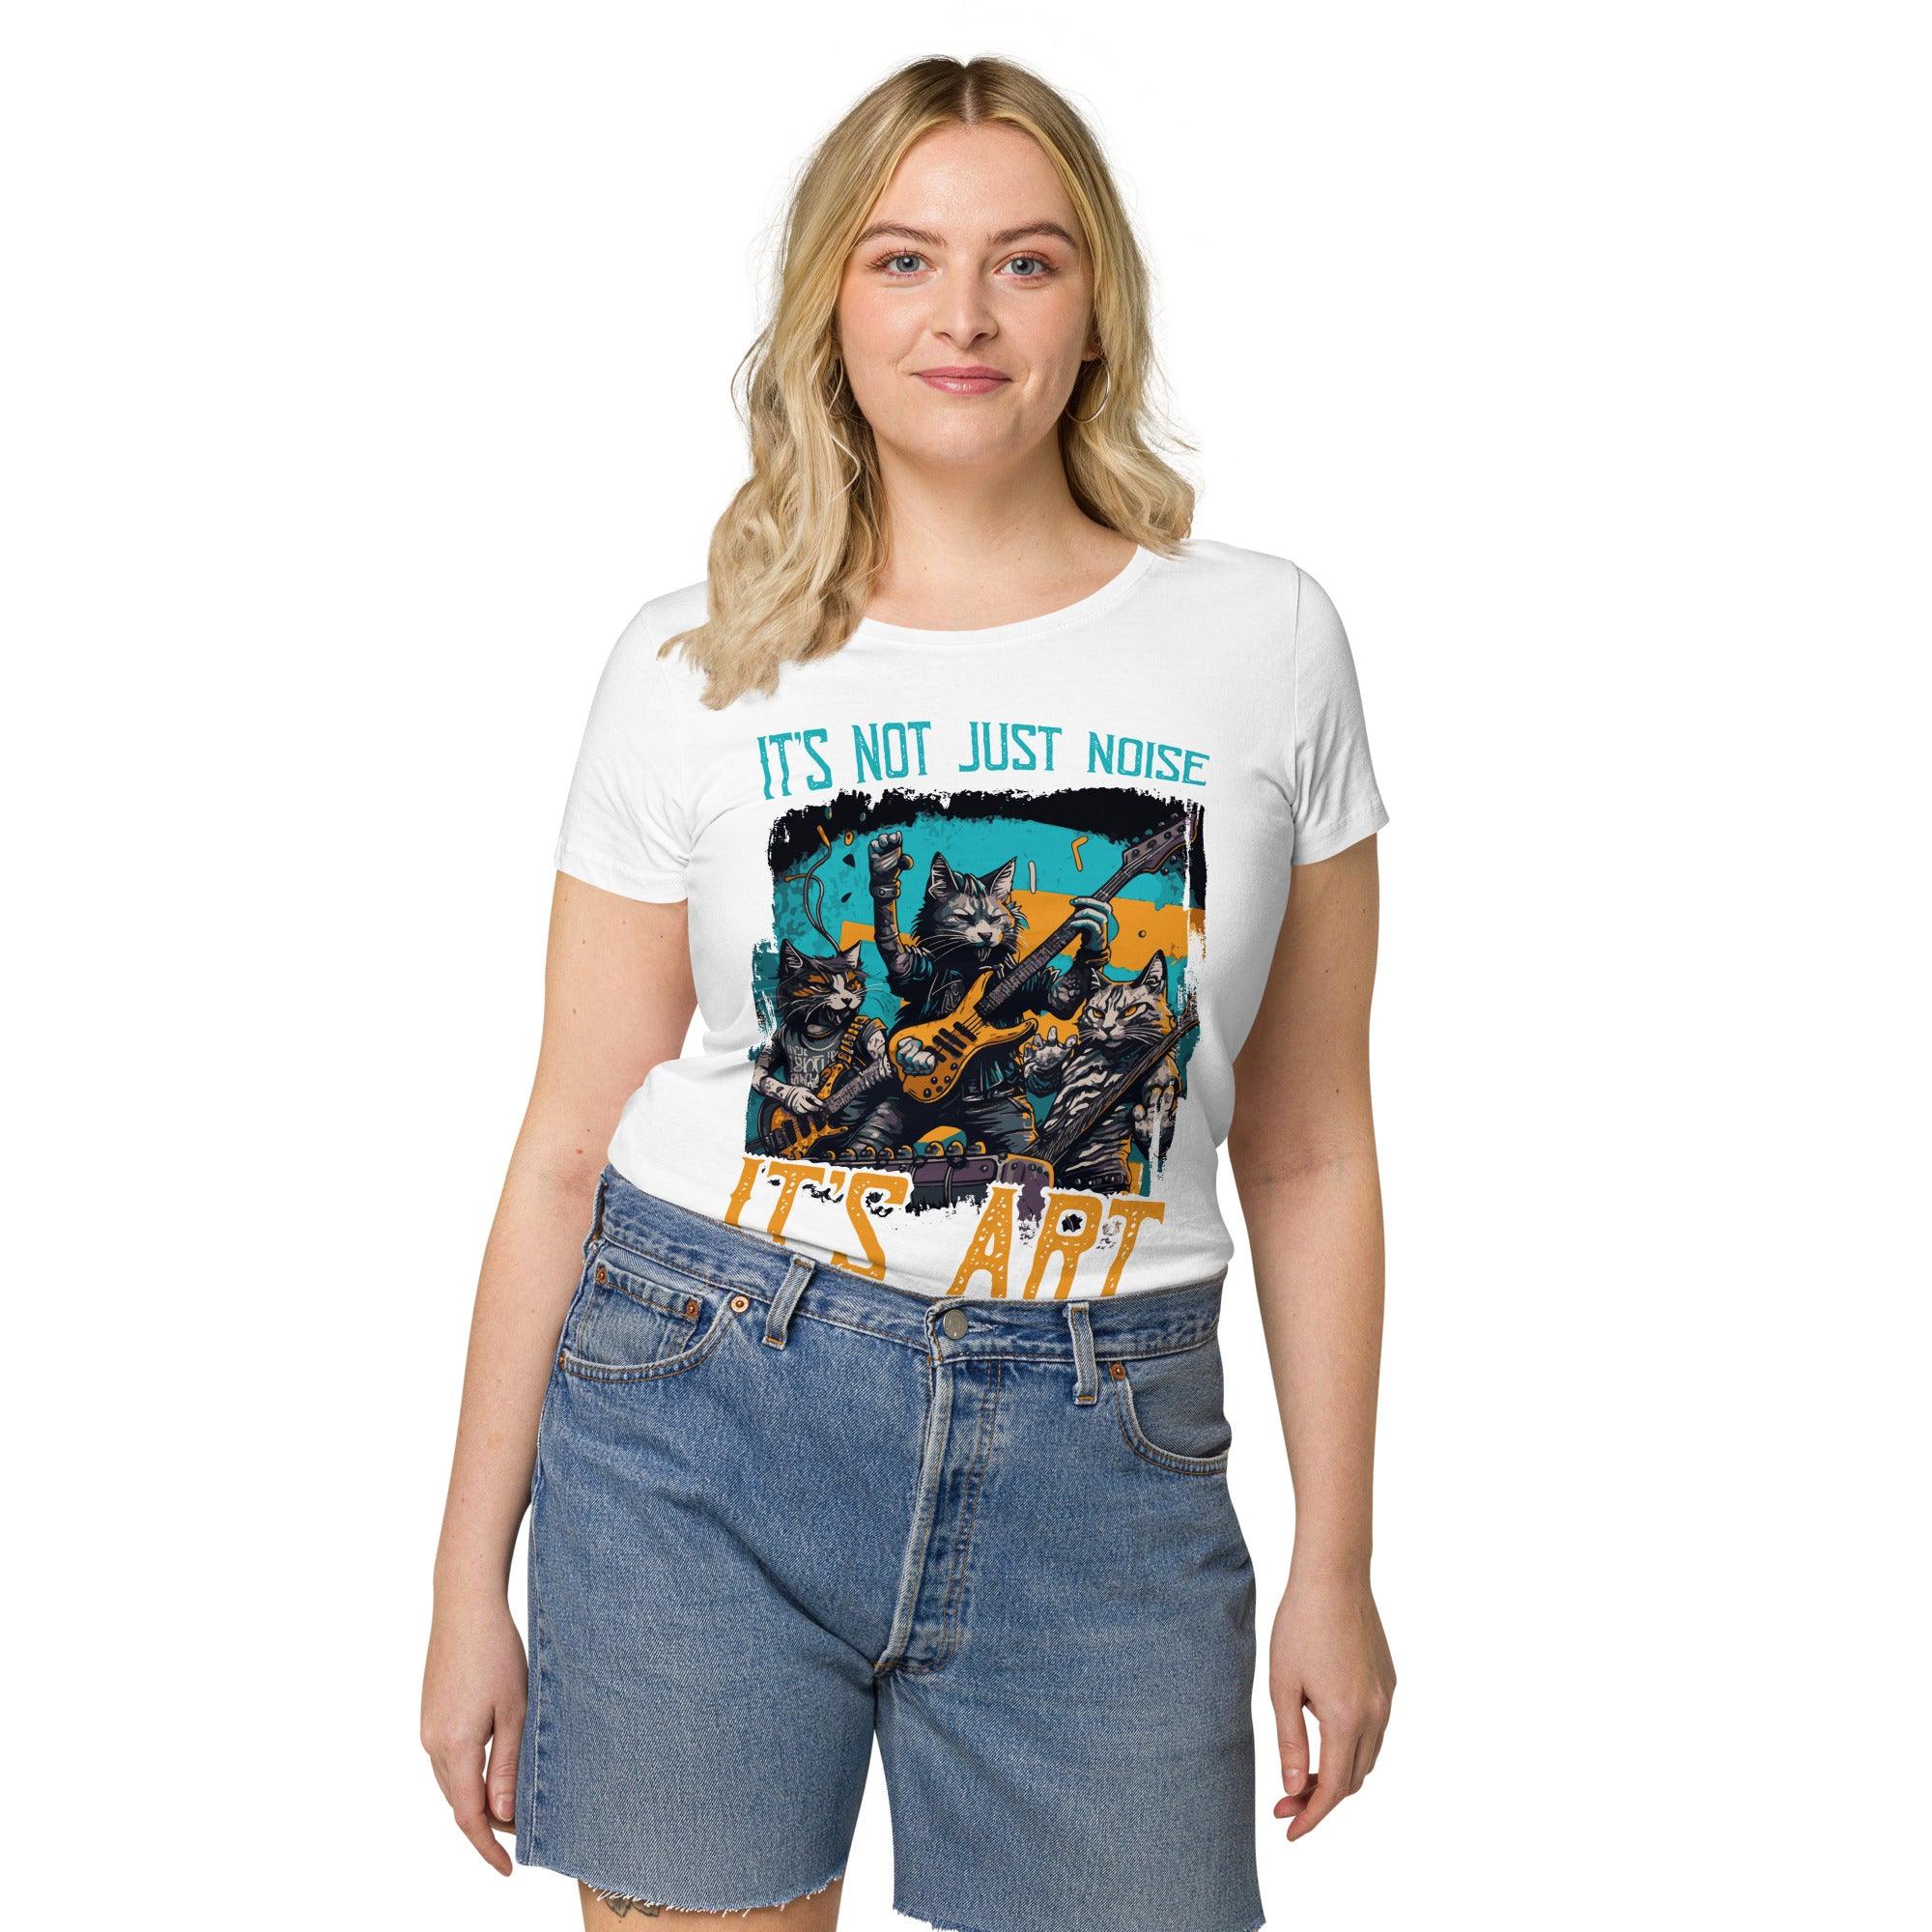 It's Art Women’s basic organic t-shirt - Beyond T-shirts